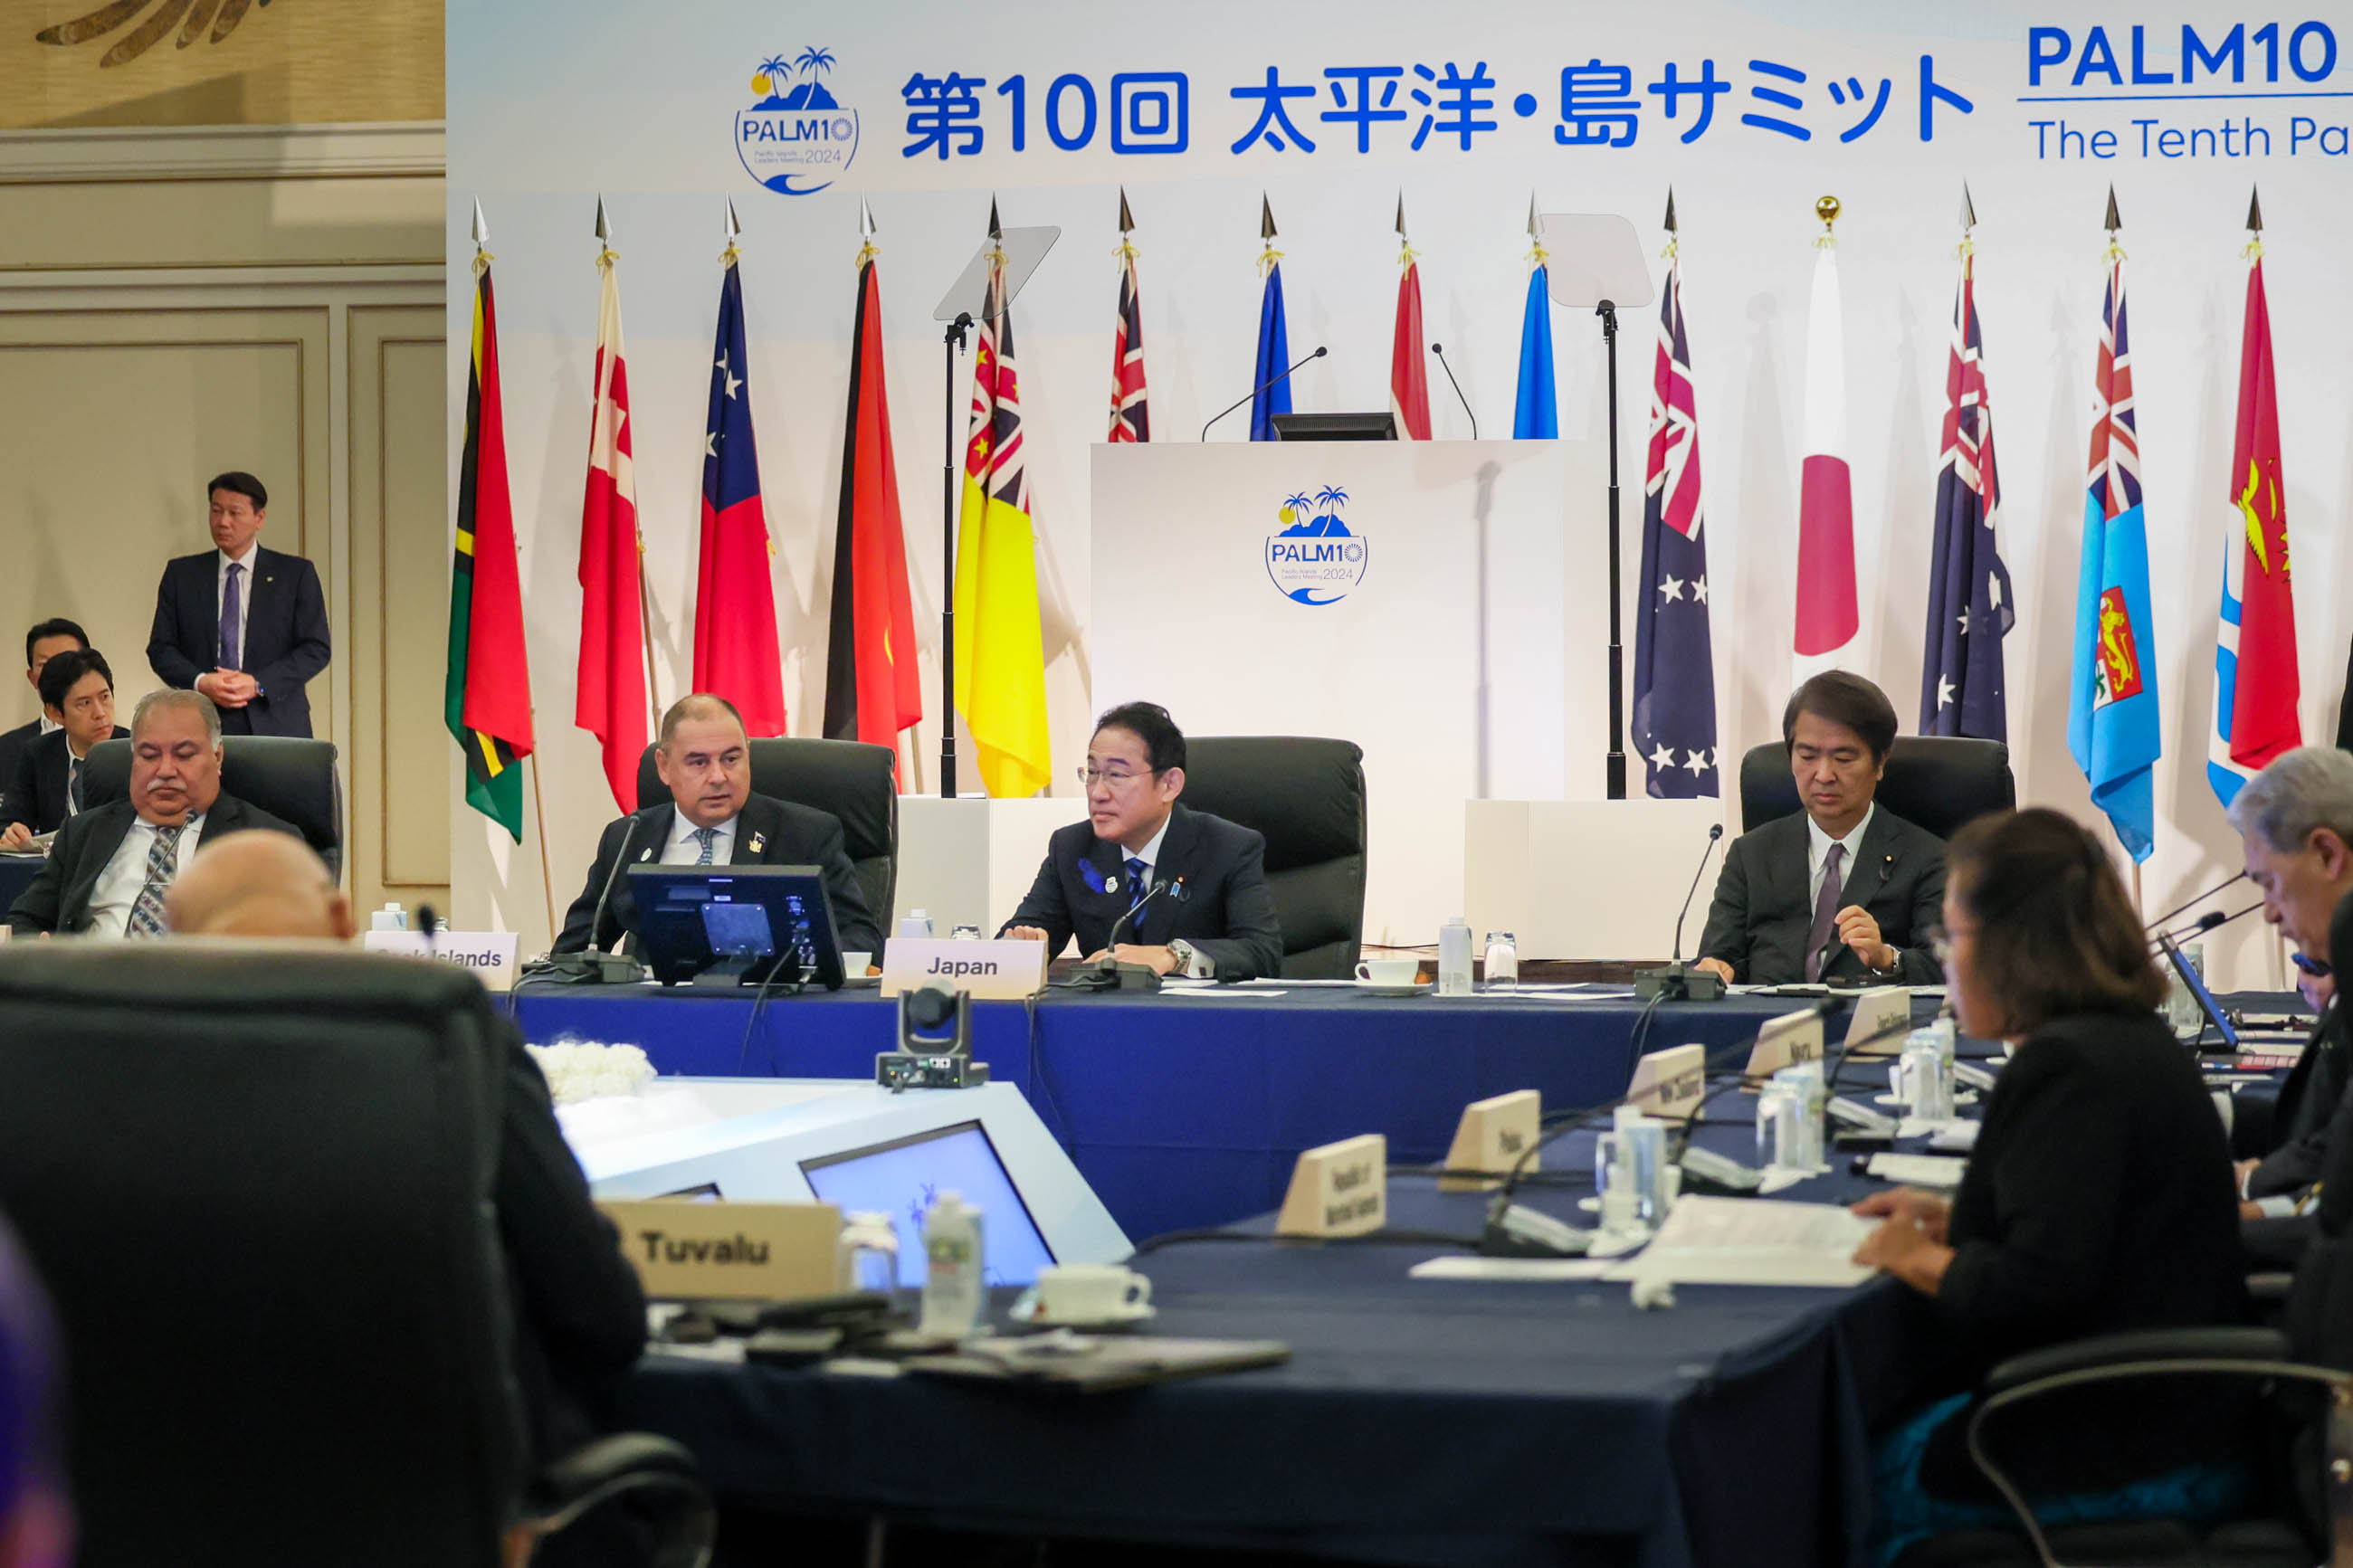 Prime Minister Kishida attending the opening session (1)